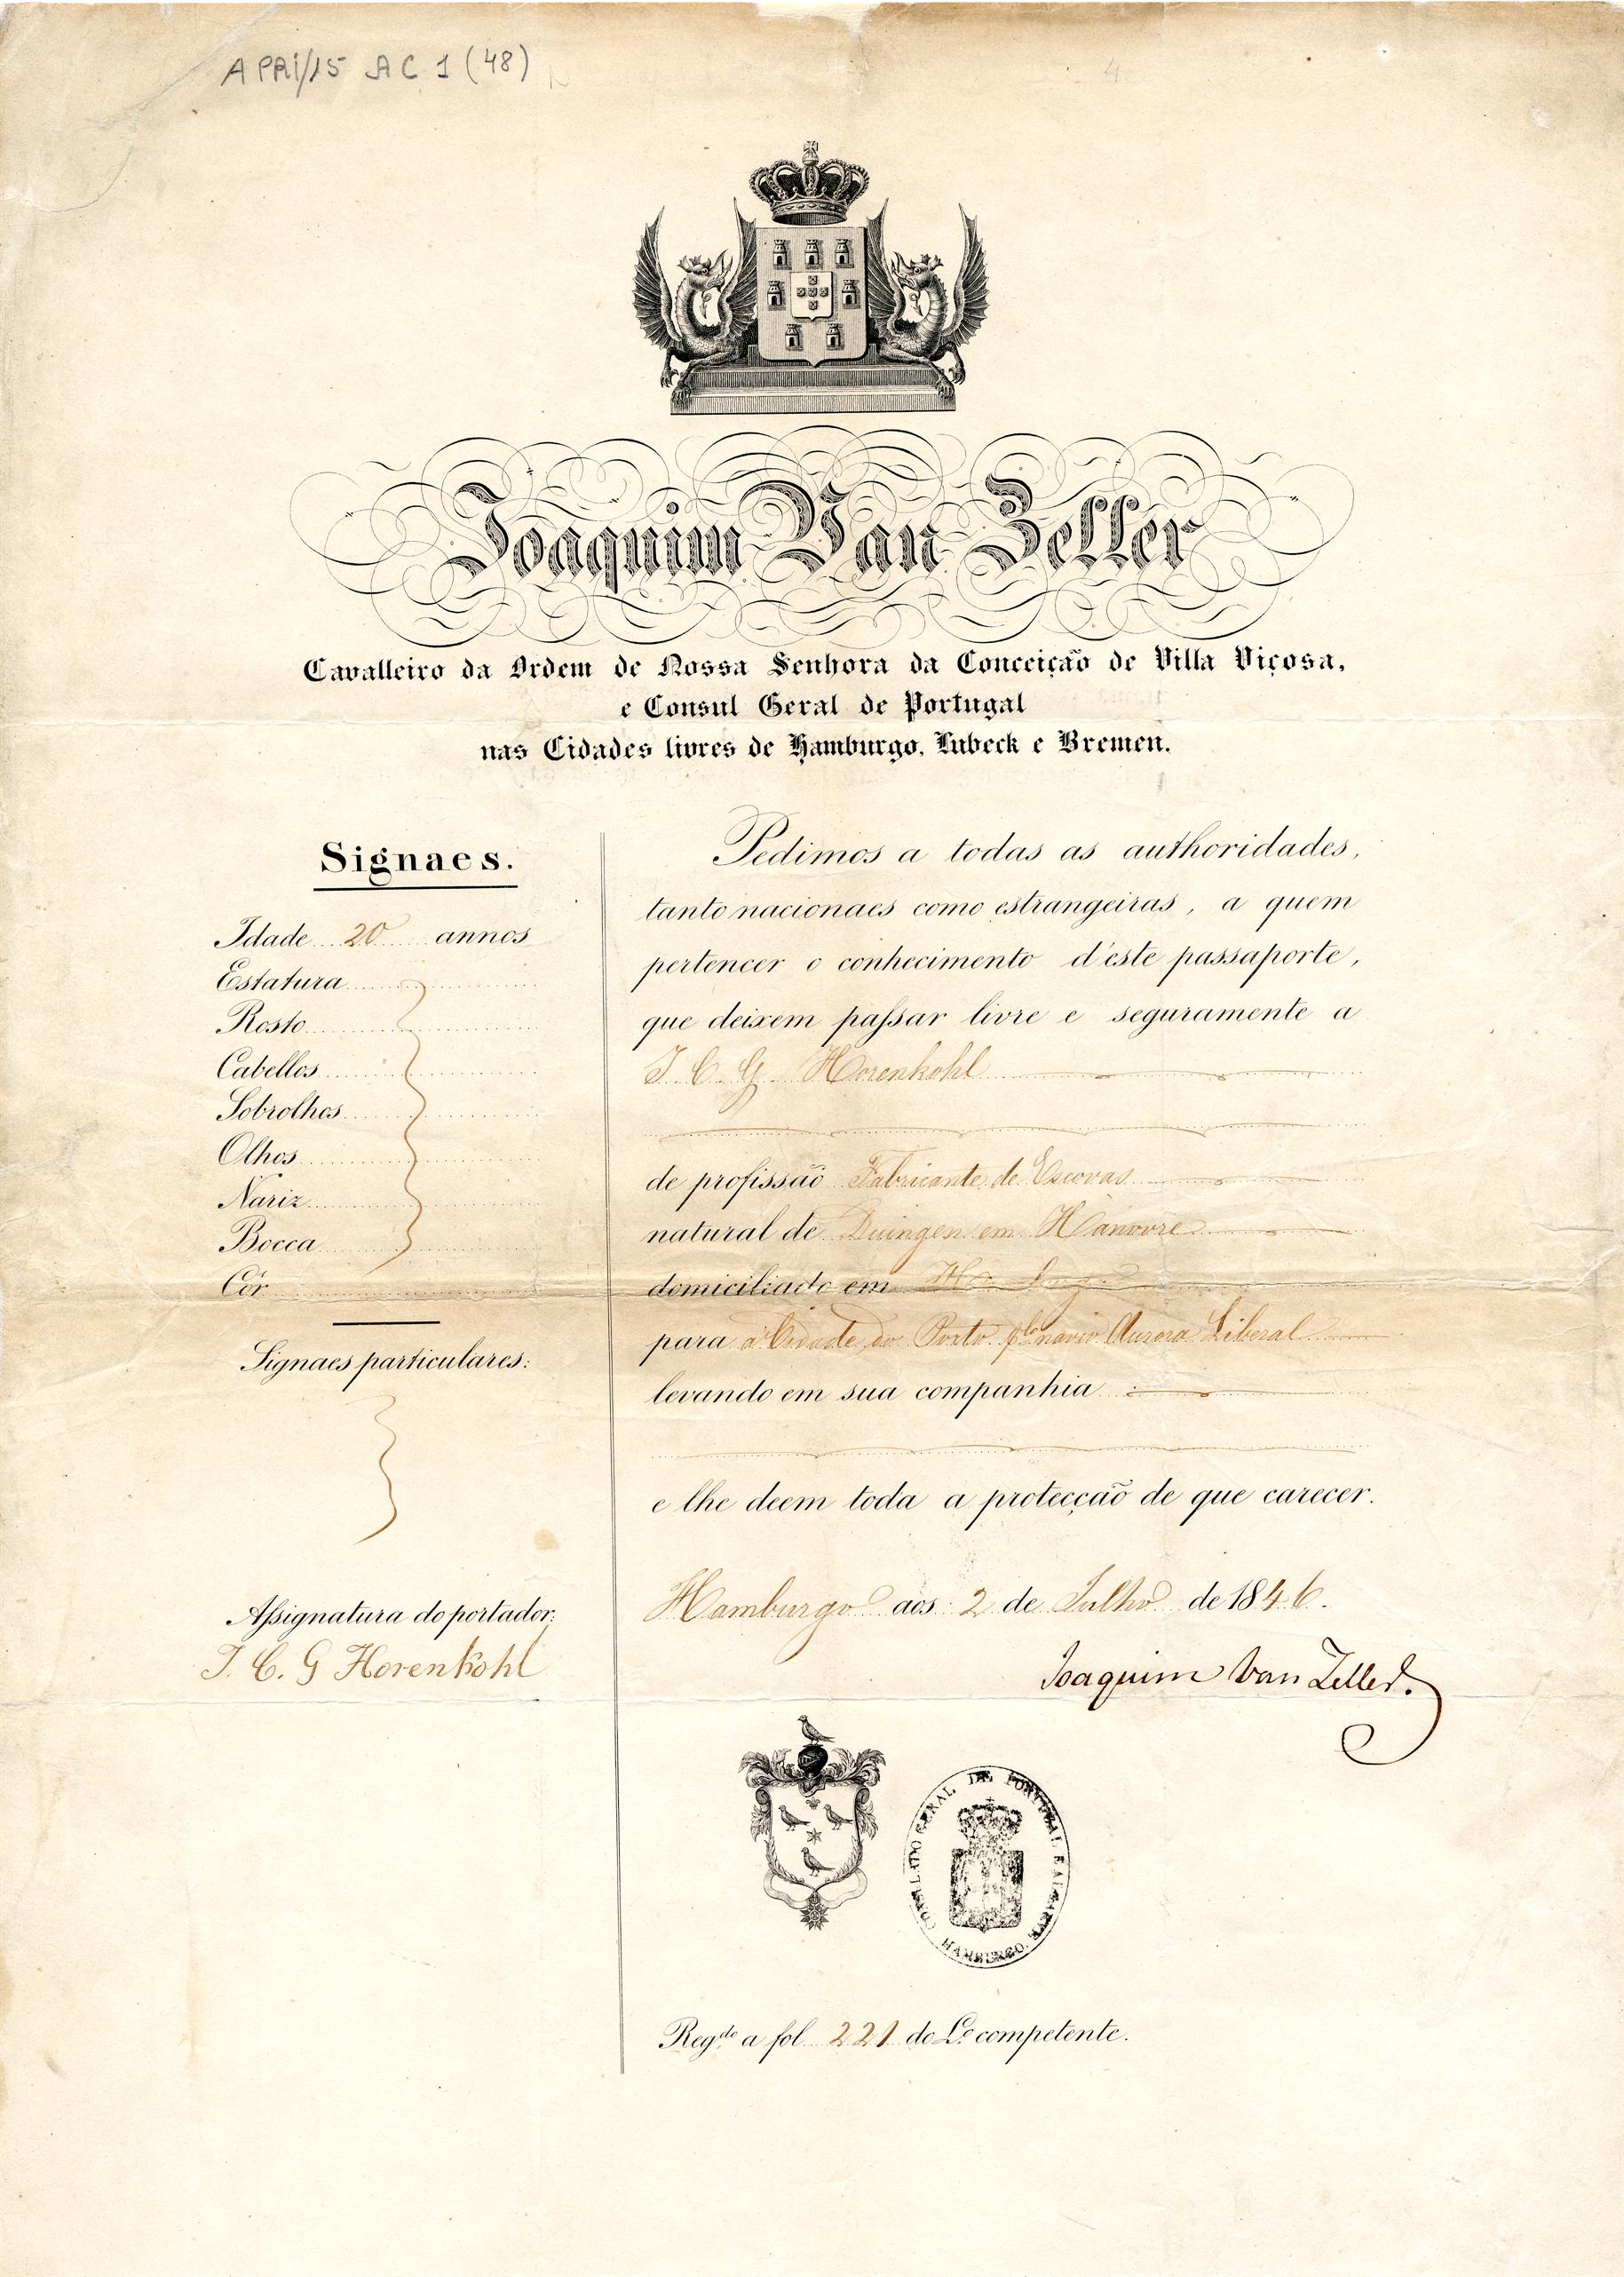 Passaportede J. C. G. Horenkohl